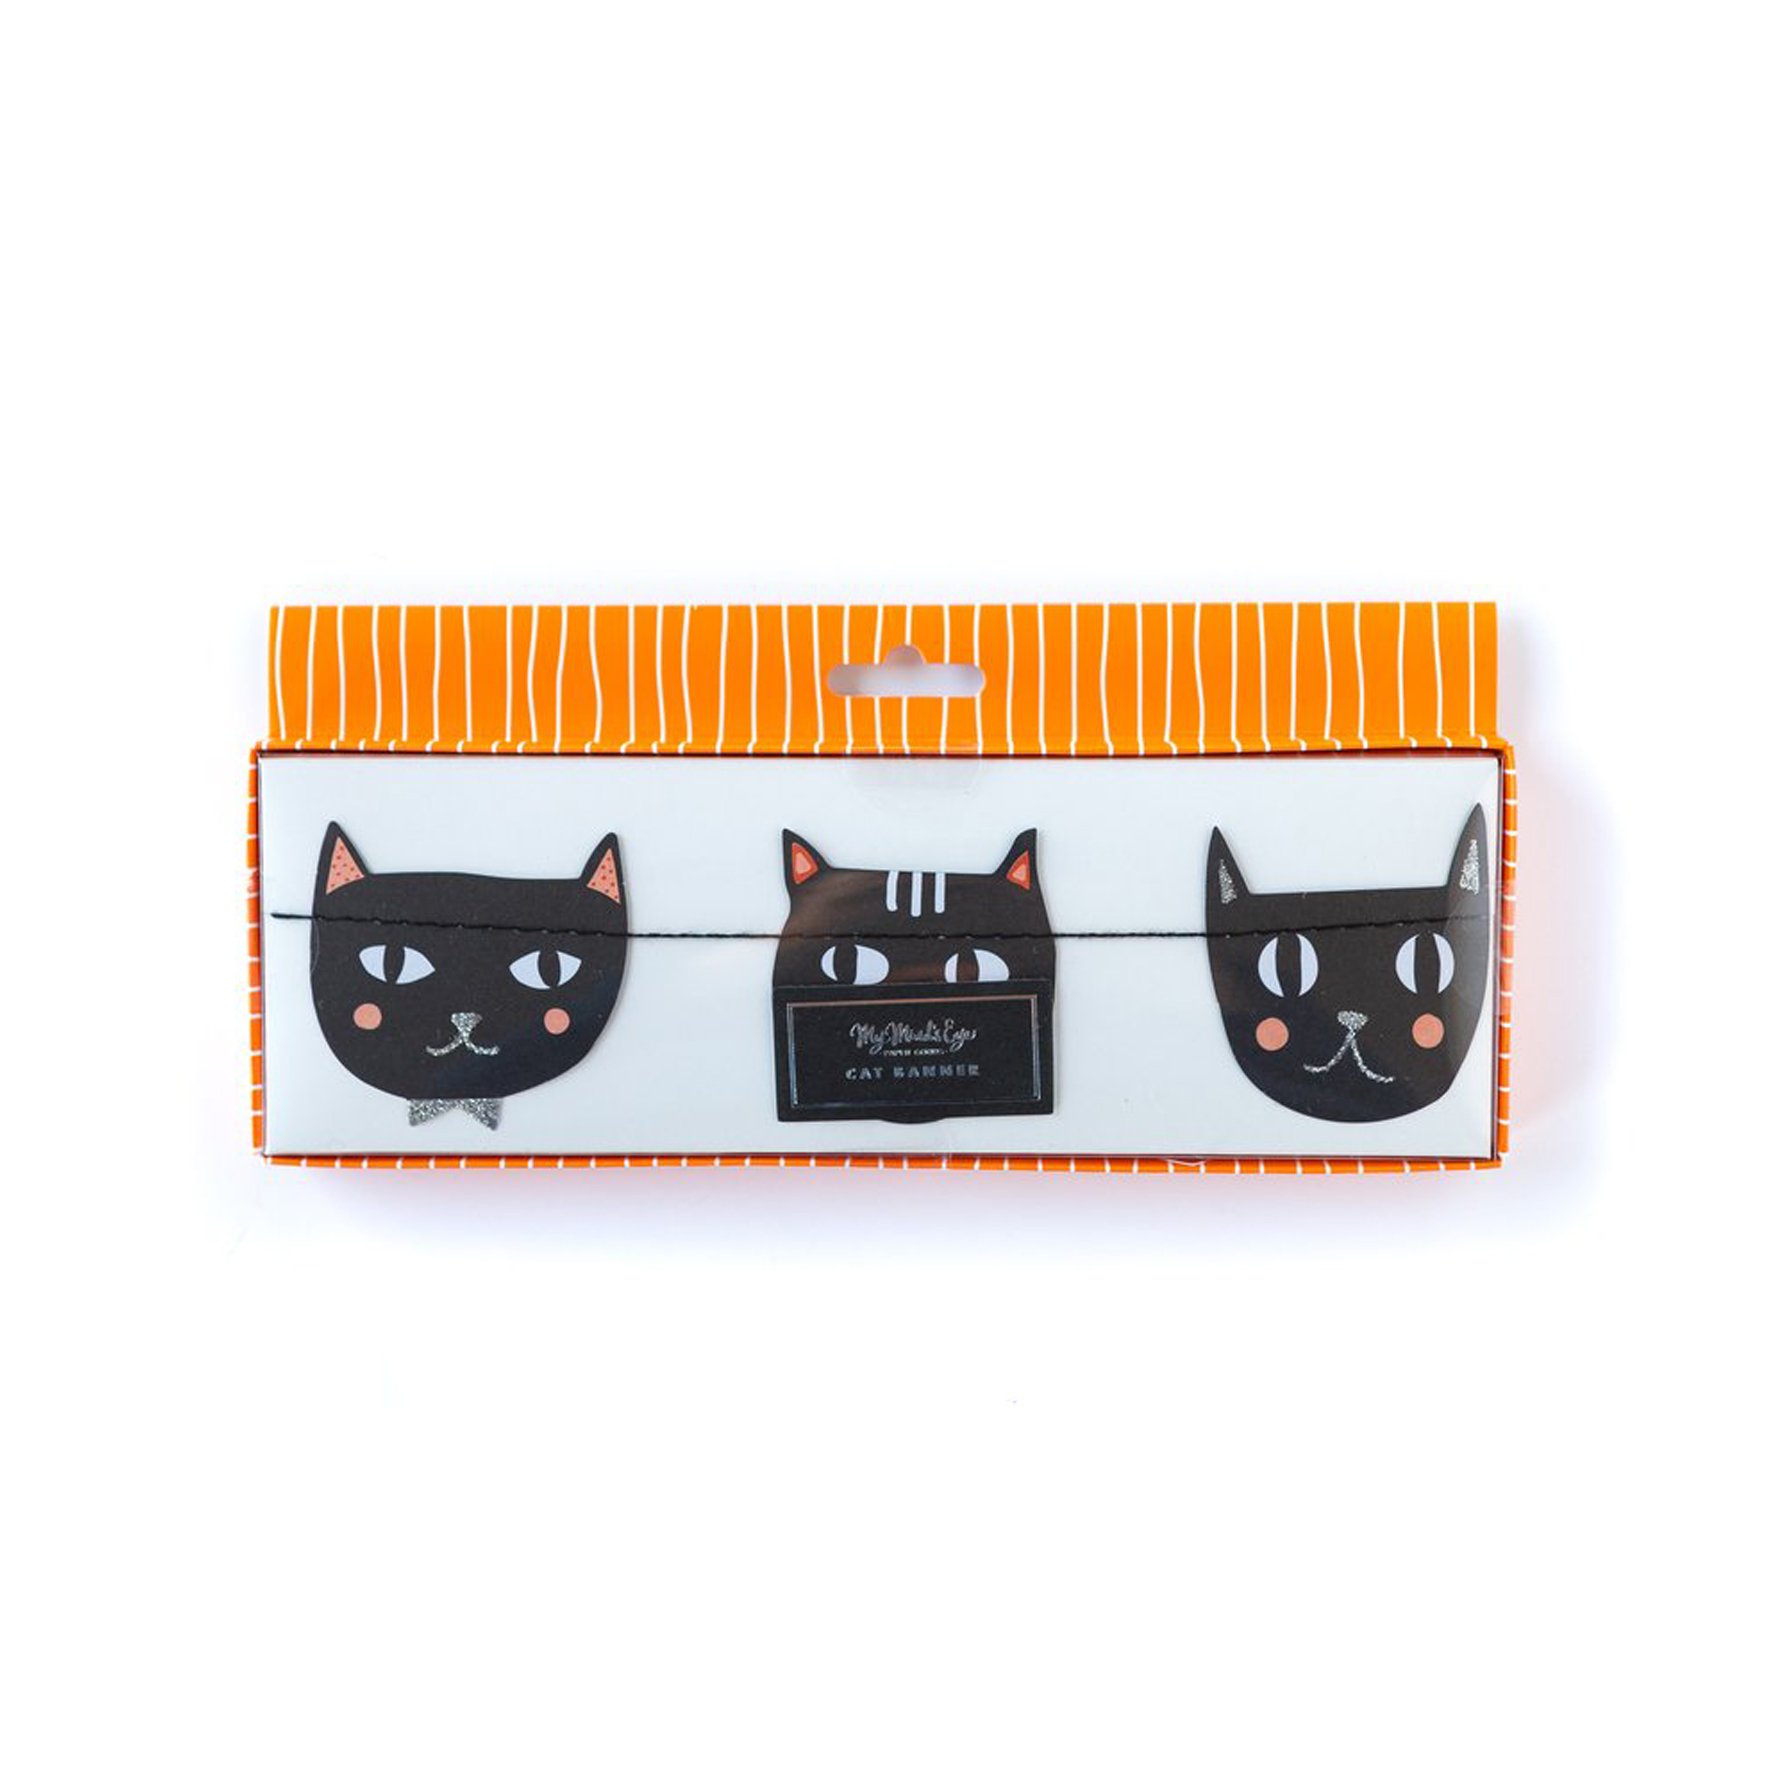 BUY ME / NEW ITEM $12.99 each Halloween Black Cat 6ft Paper Garland